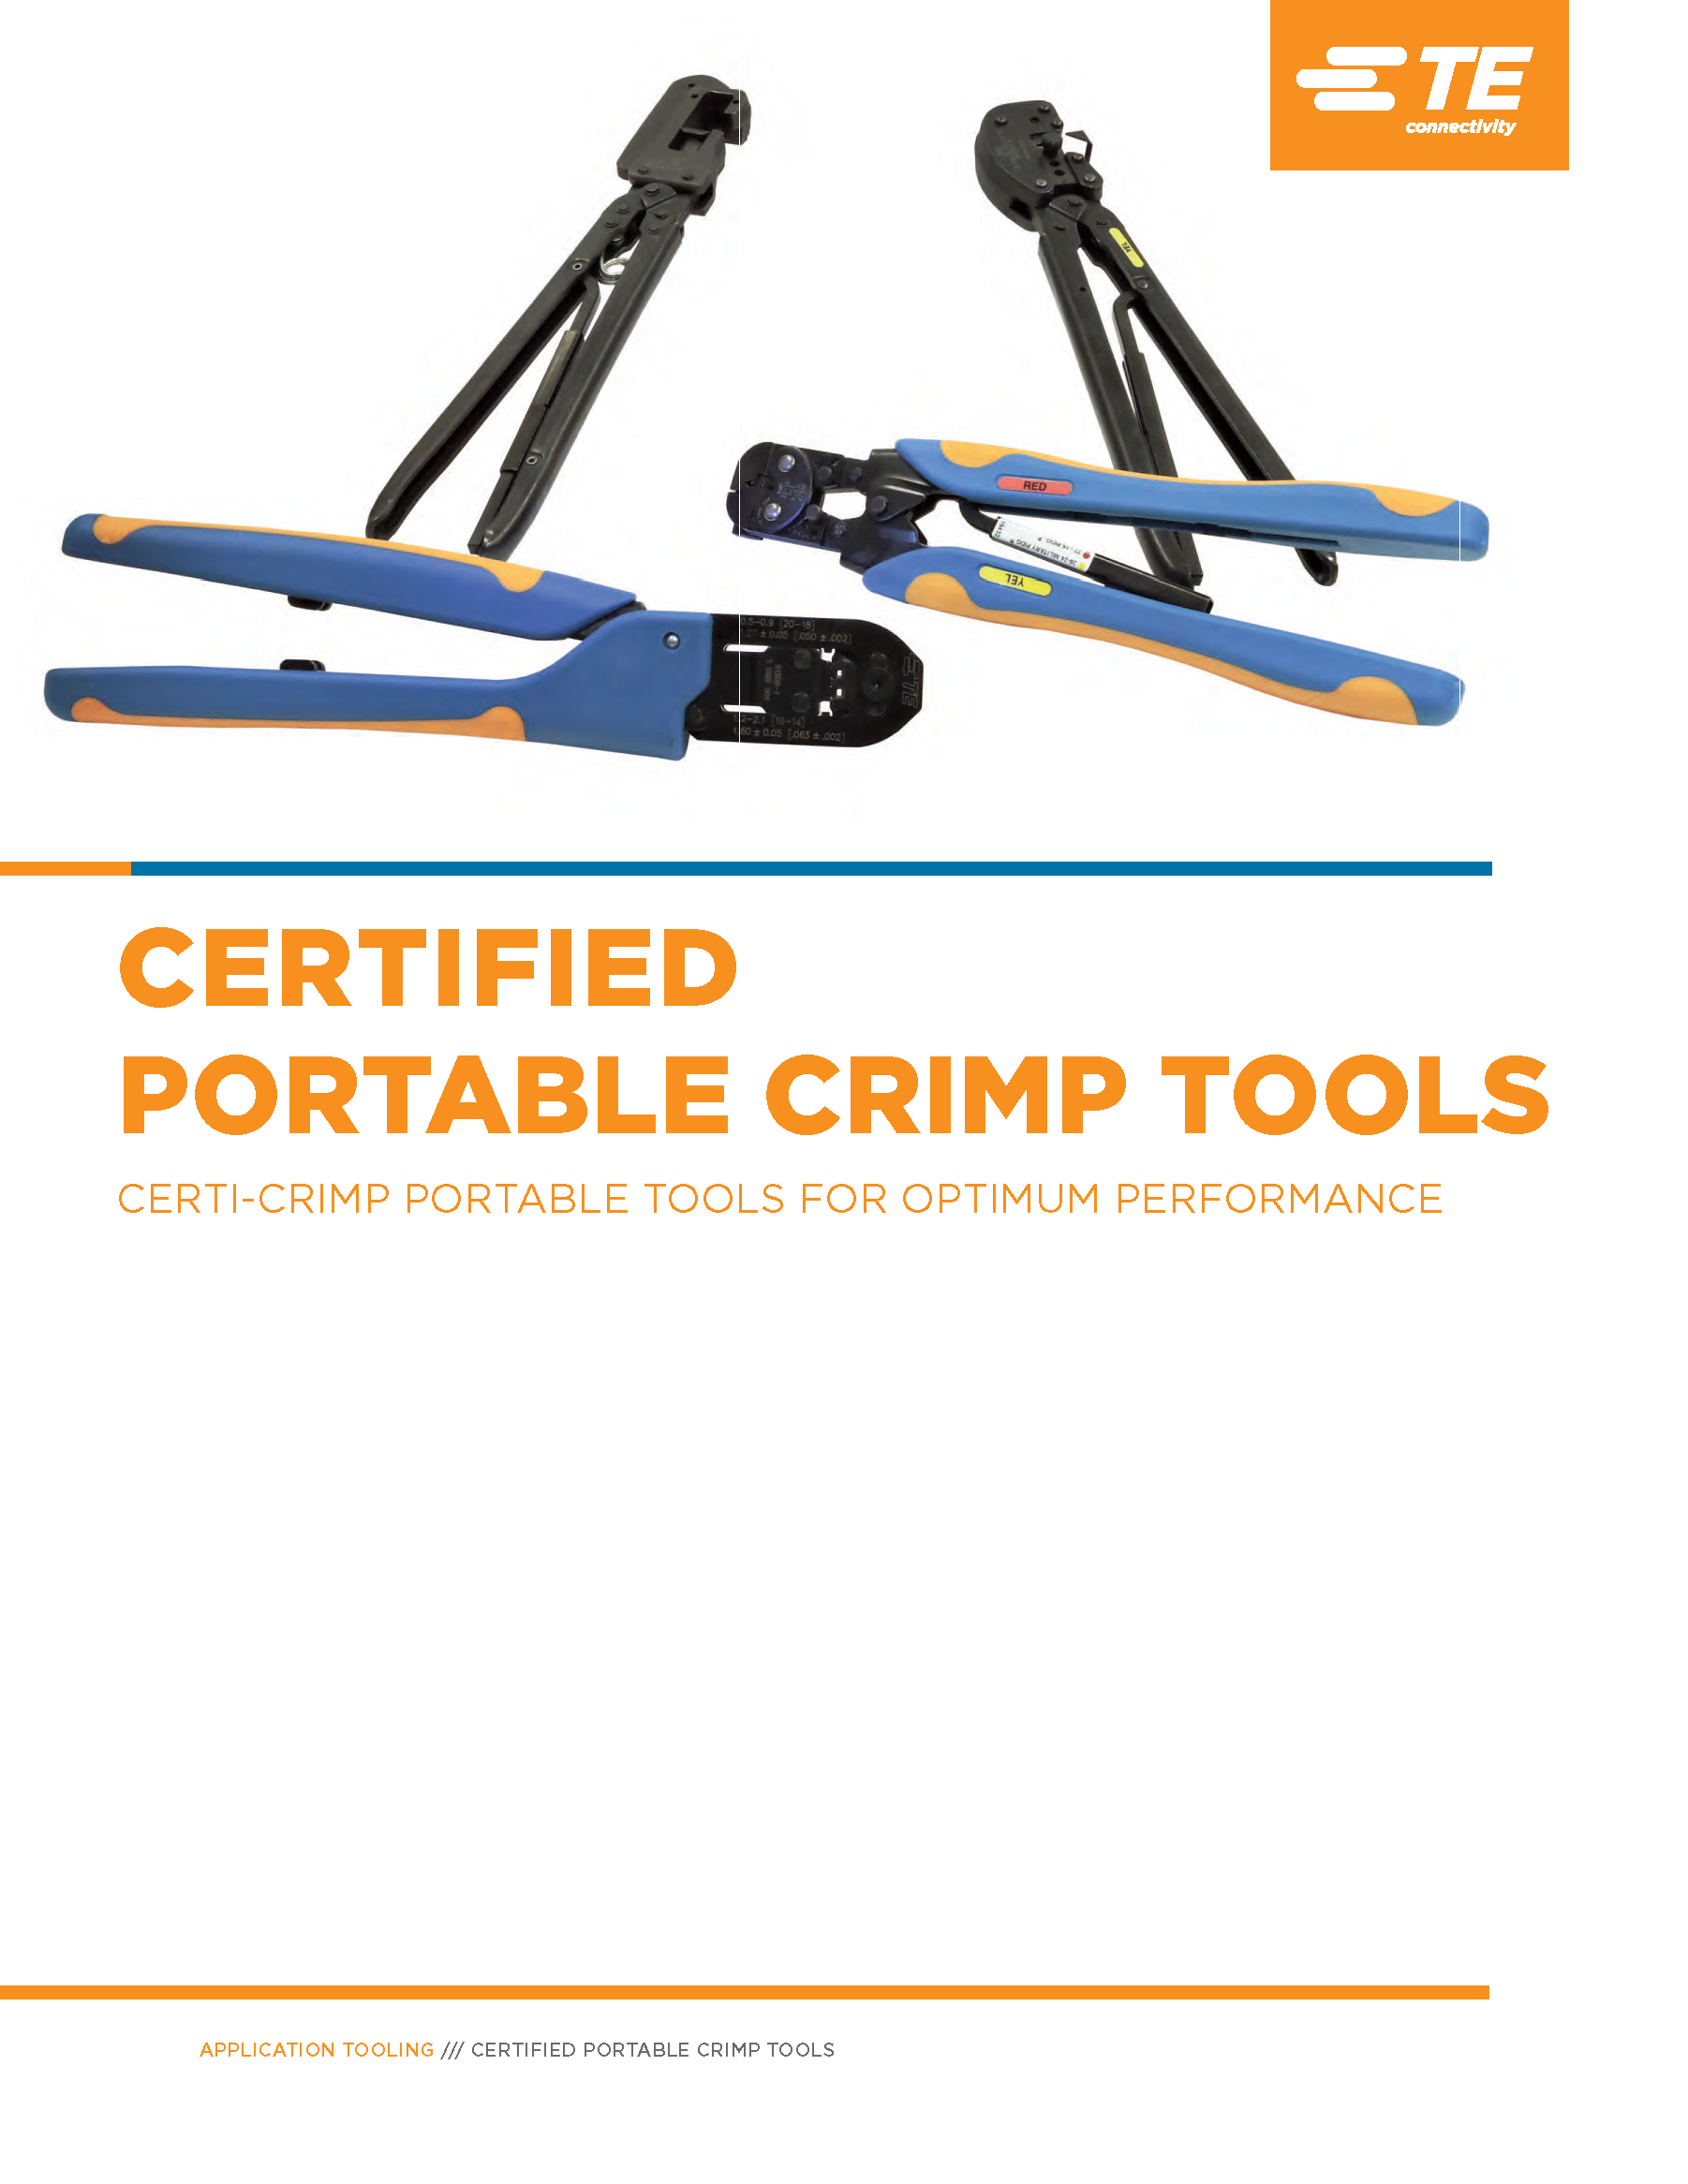 TE Portable Crimp Tooling Catalog